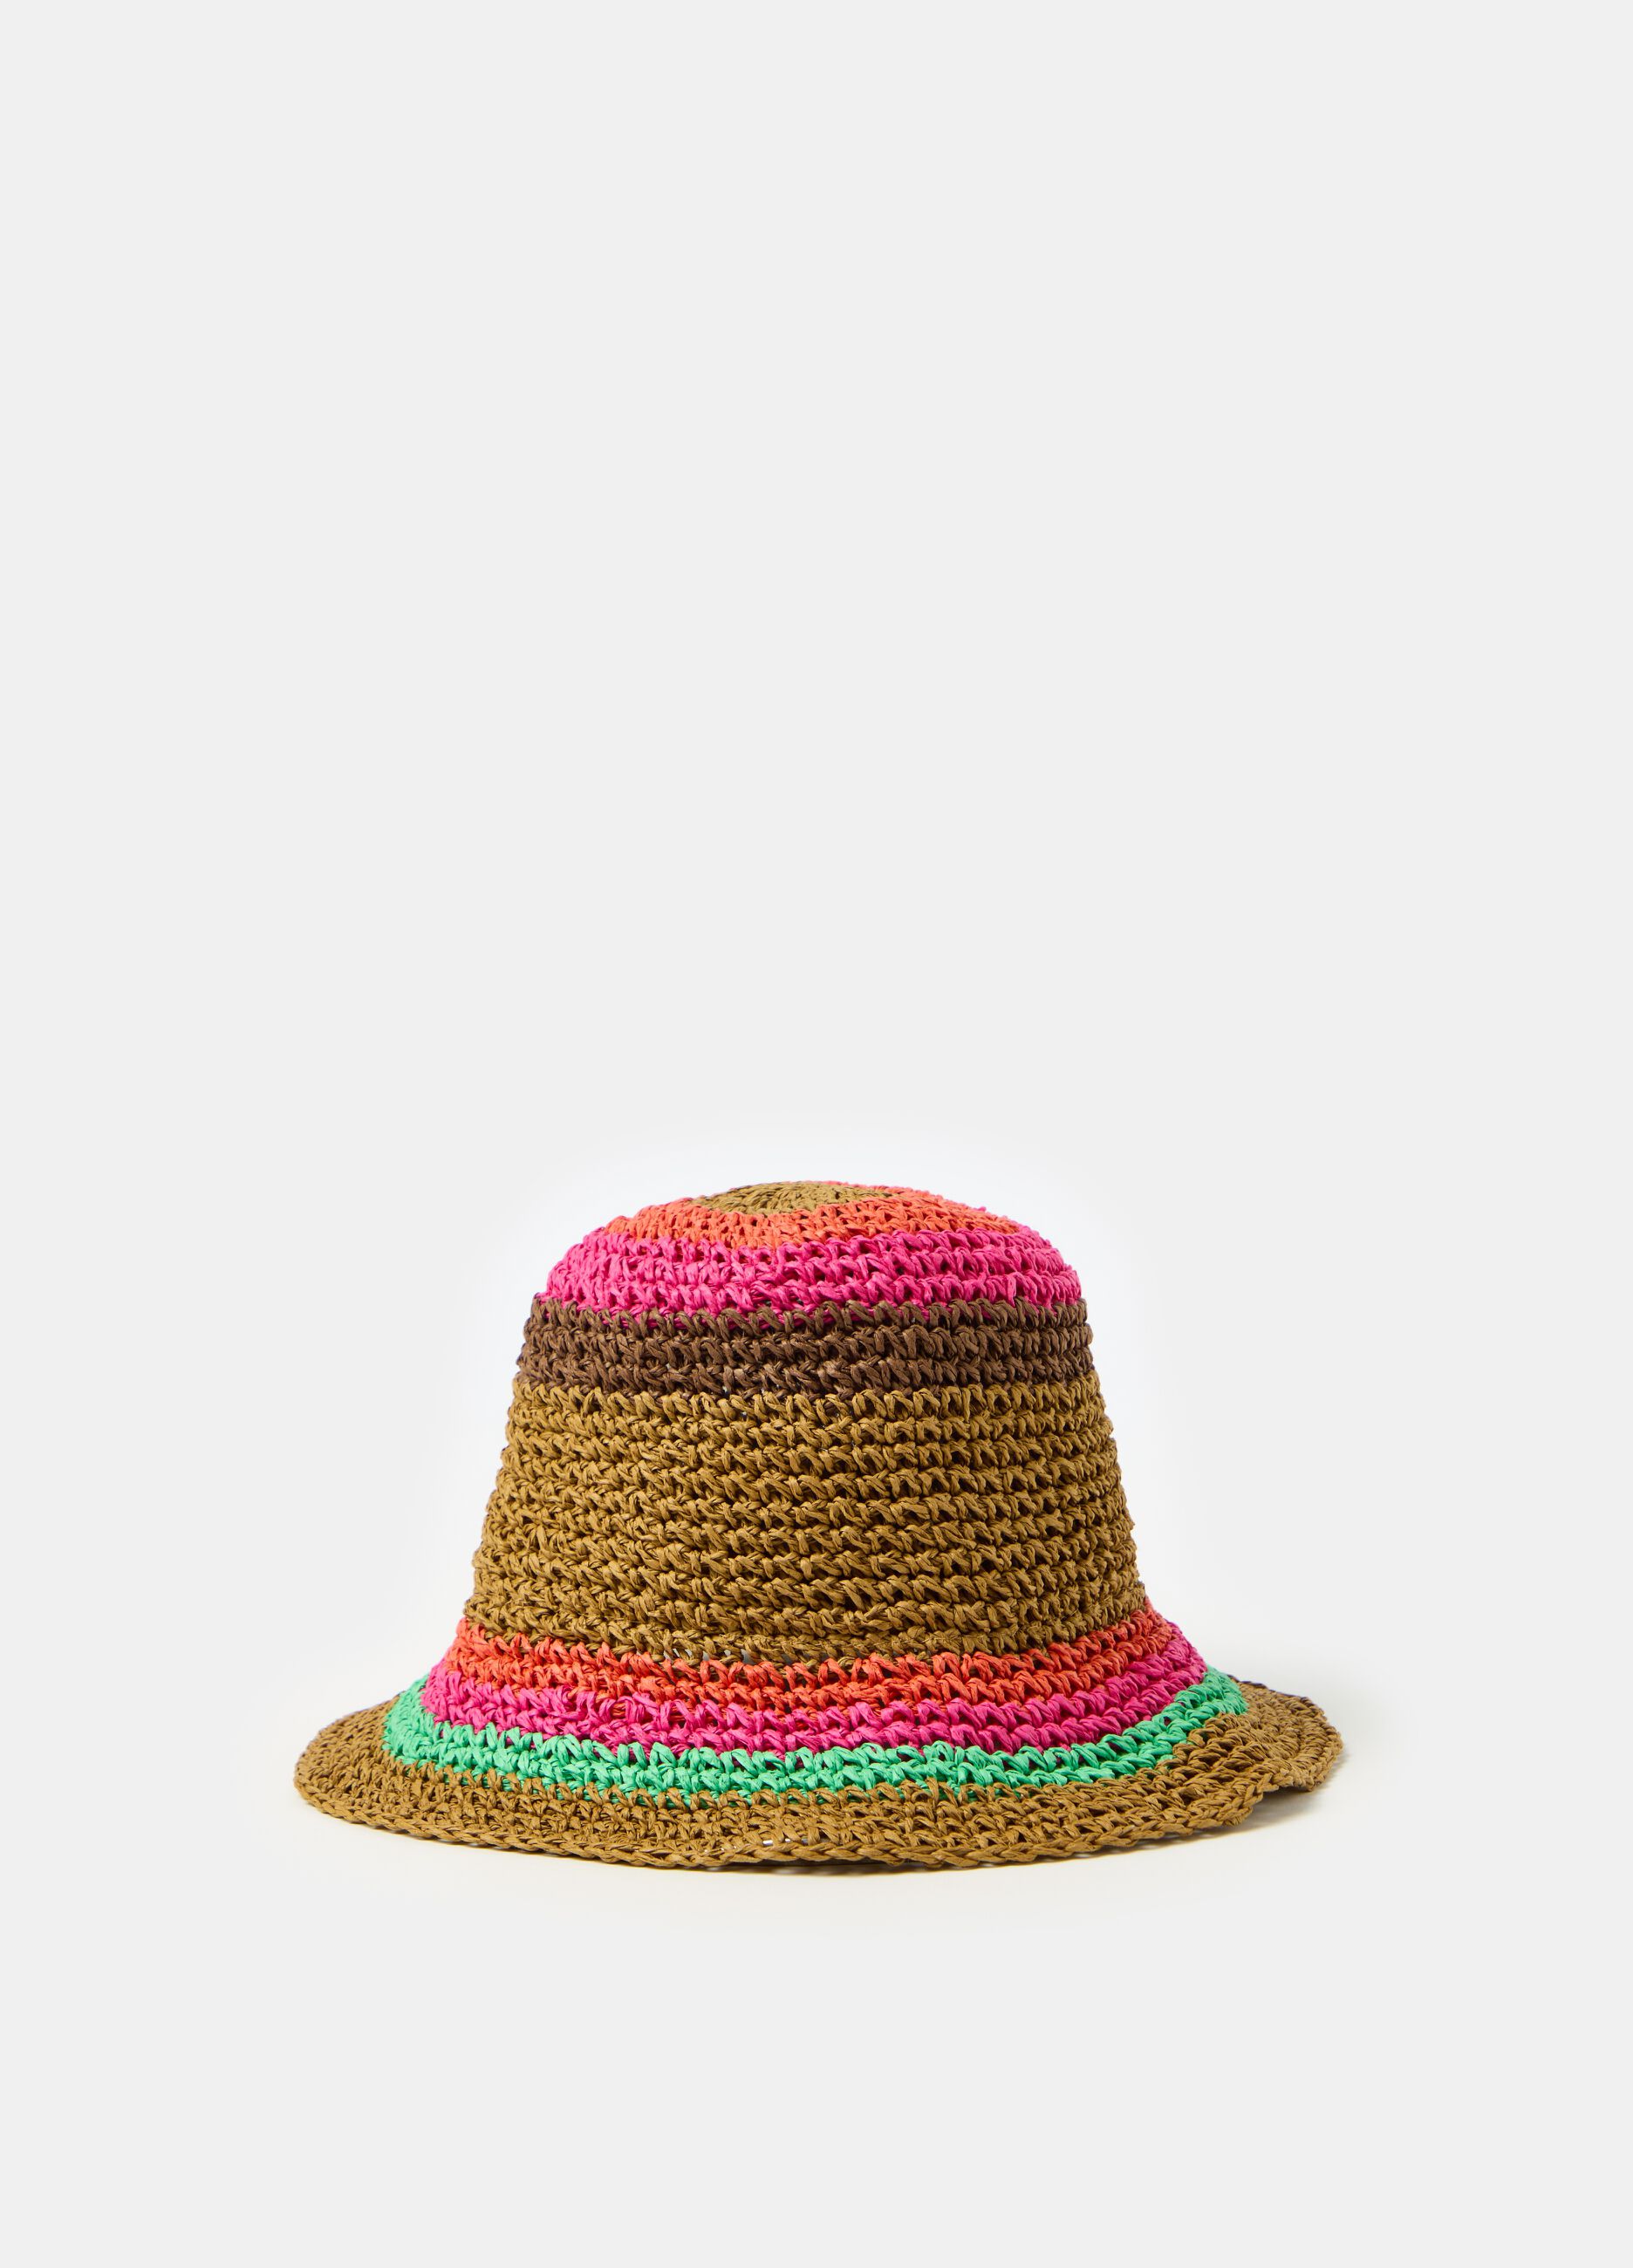 Raffia hat with striped pattern